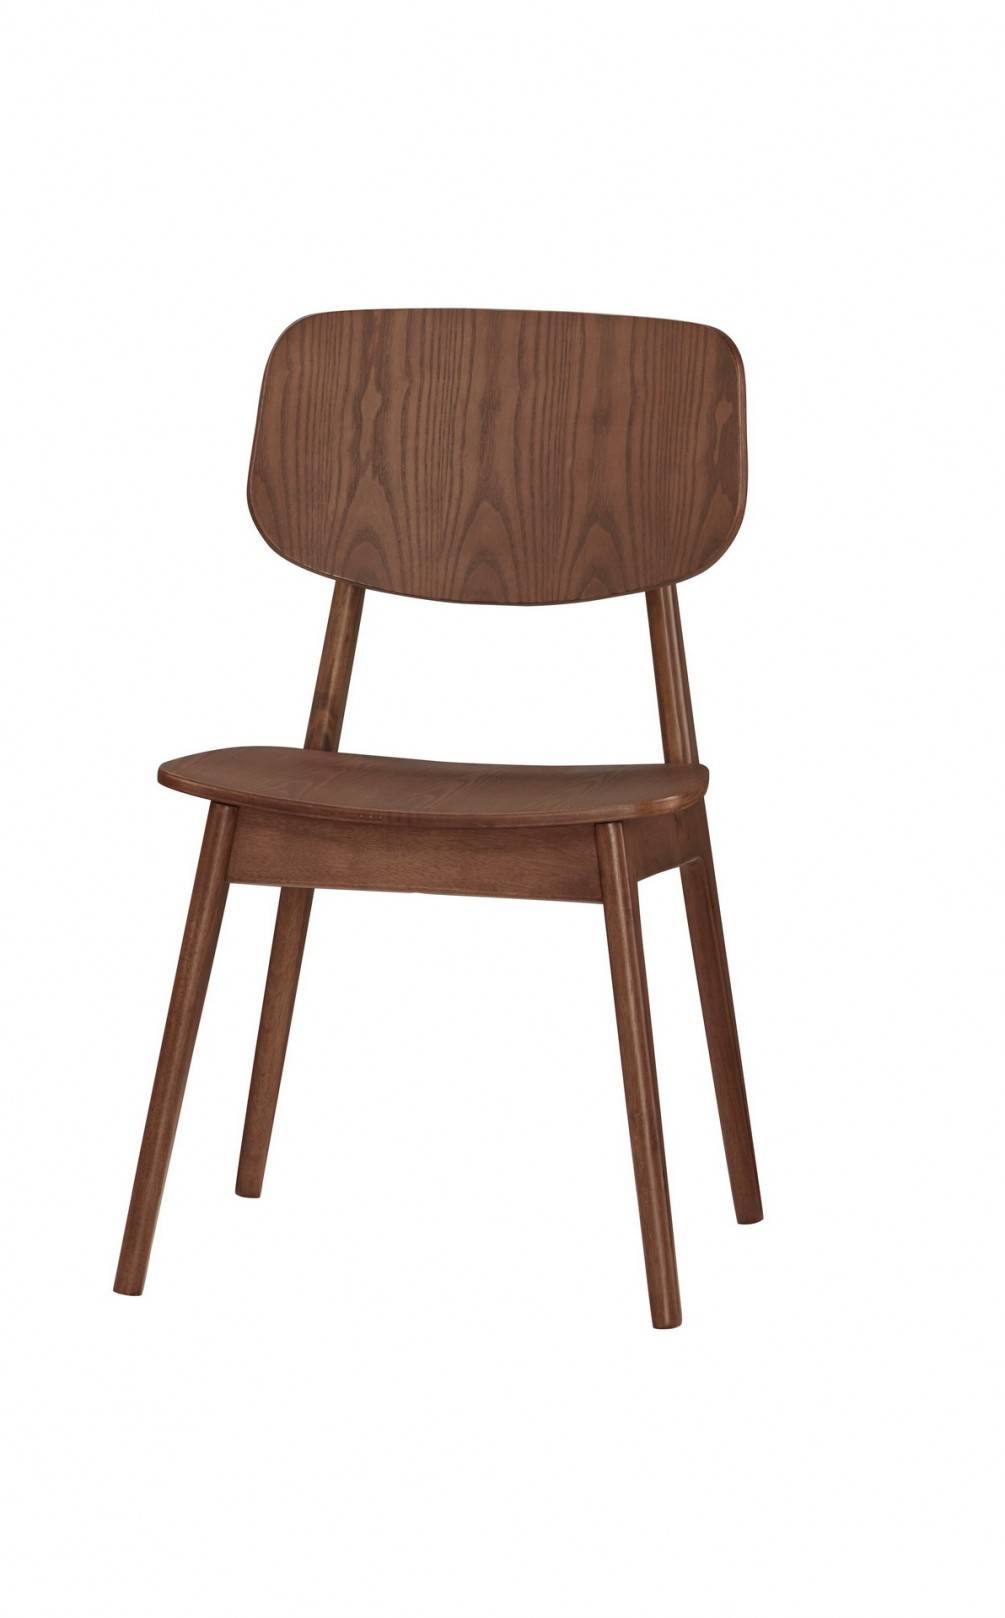 QM-642-2 卡爾馬餐椅(板)(實木) (不含其他產品)<br /> 尺寸:寬48*深54*高82cm